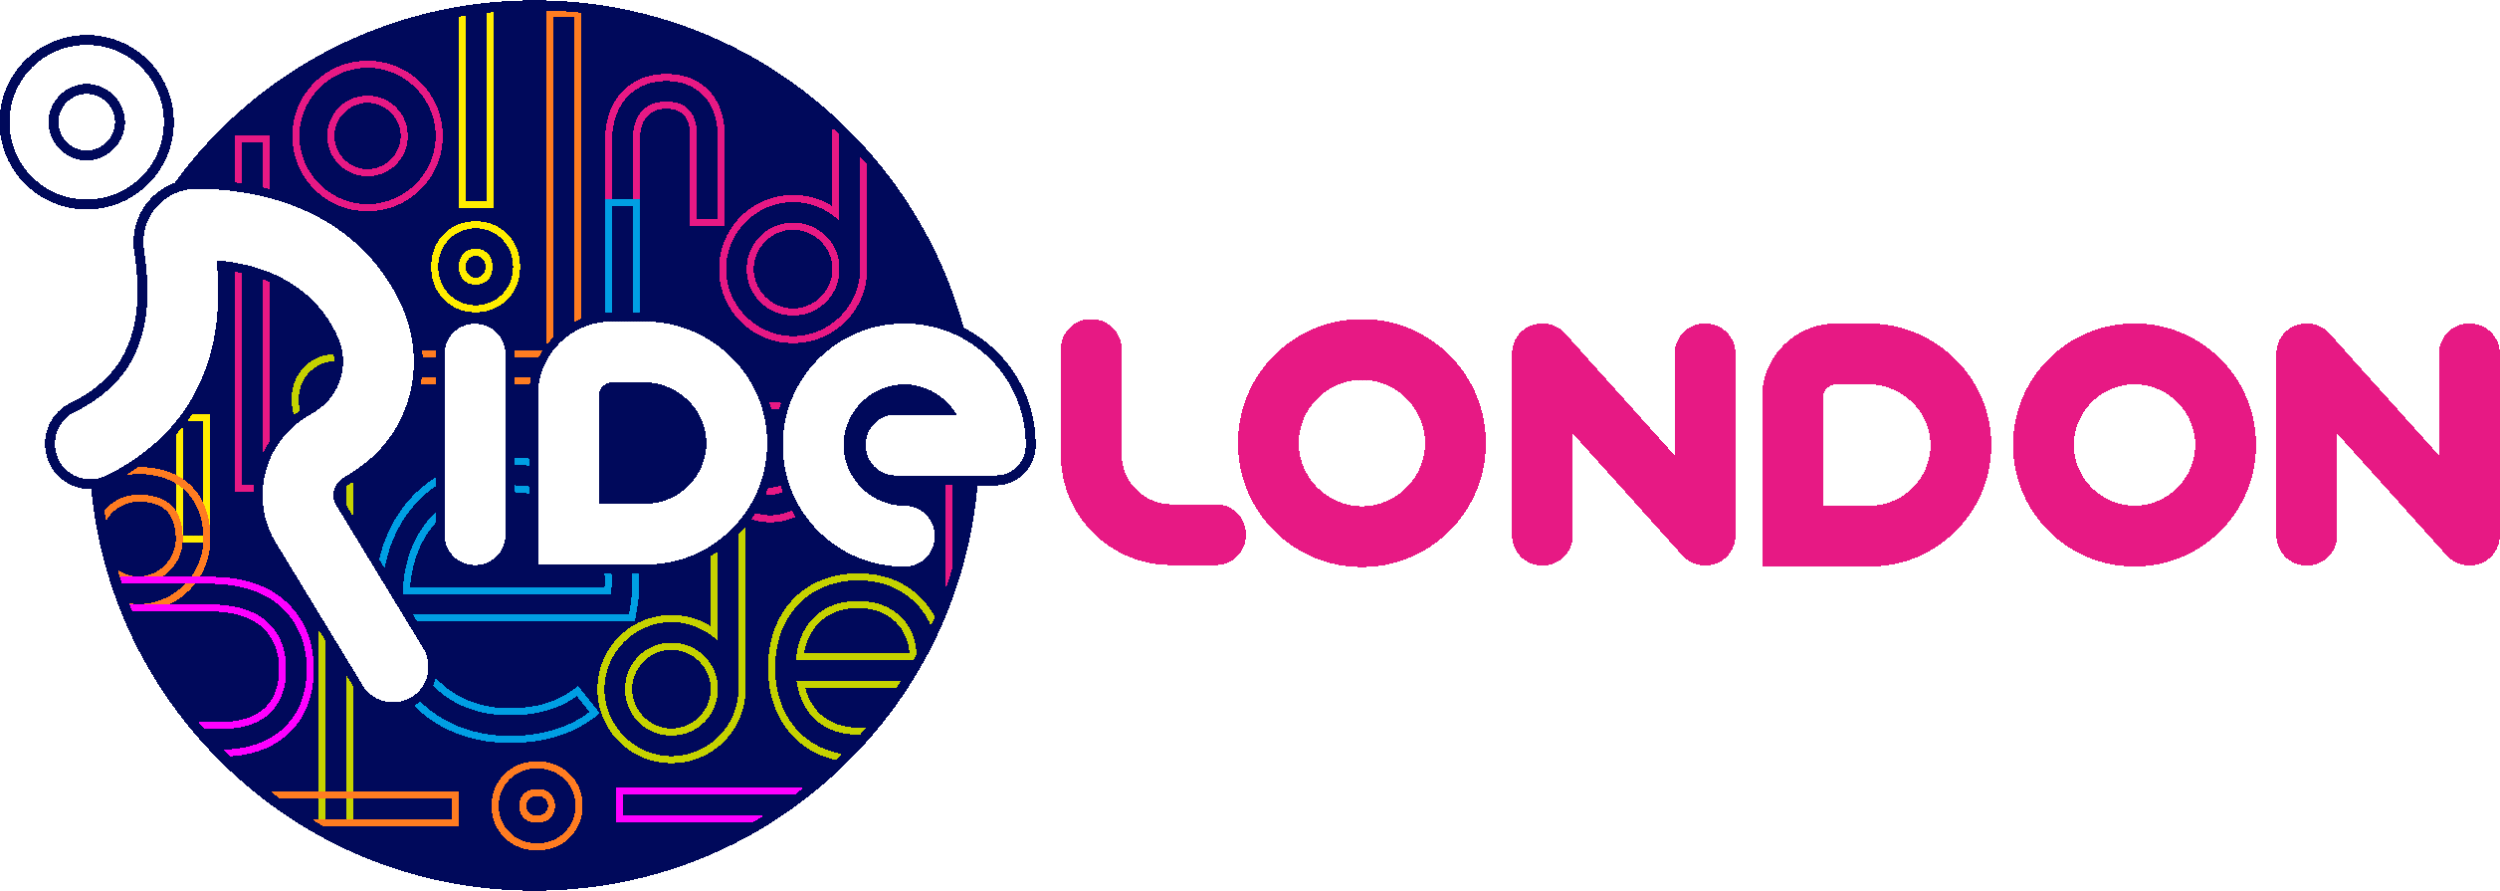 Ride London Essex Logo shaped like a ticket